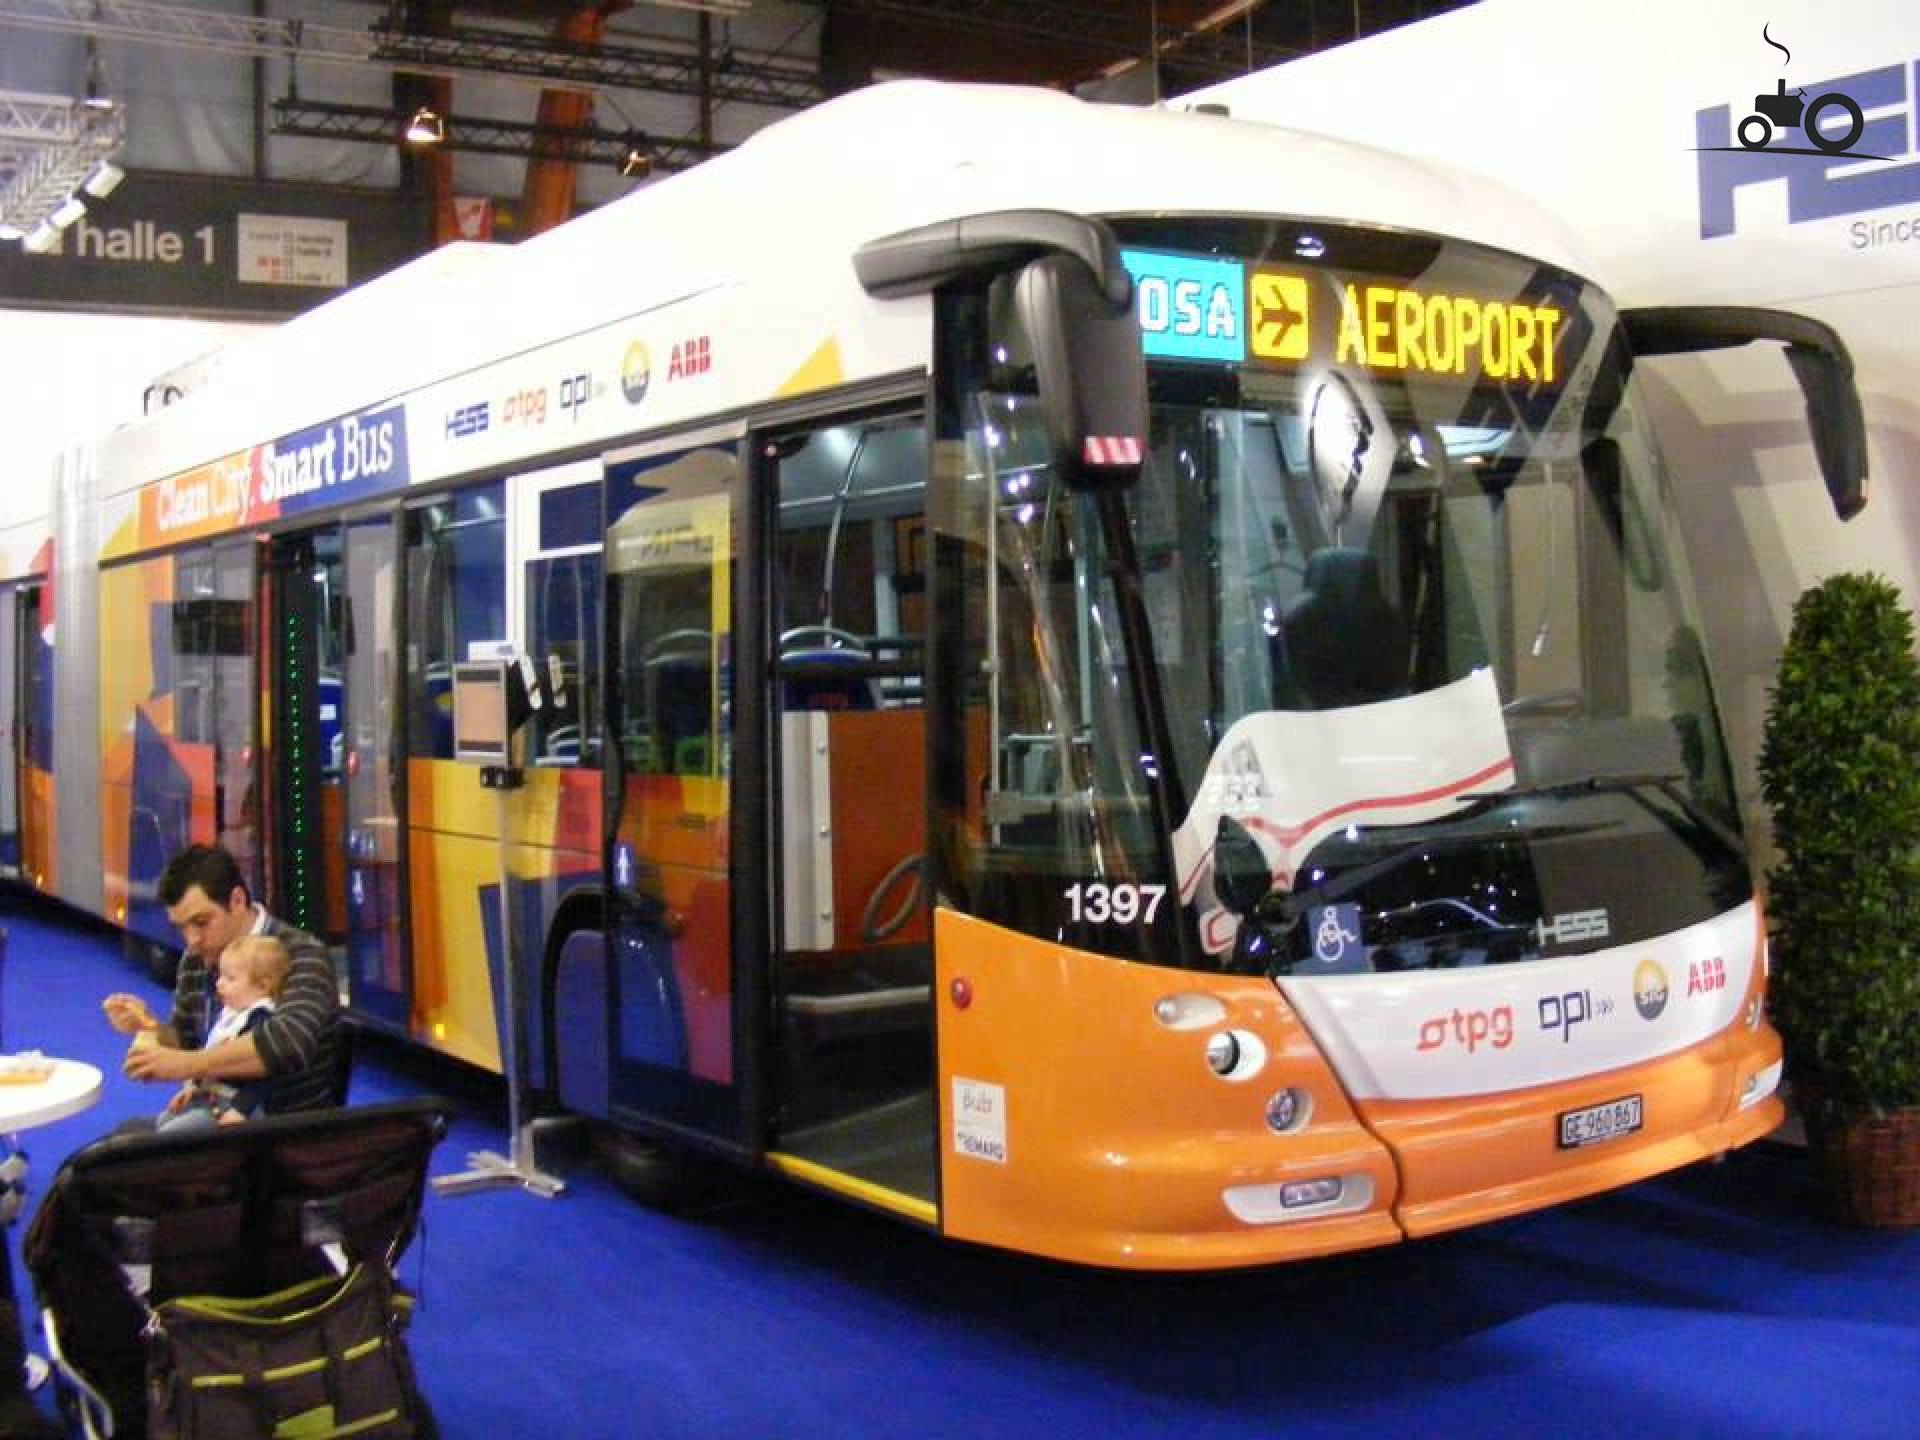 Hess bus